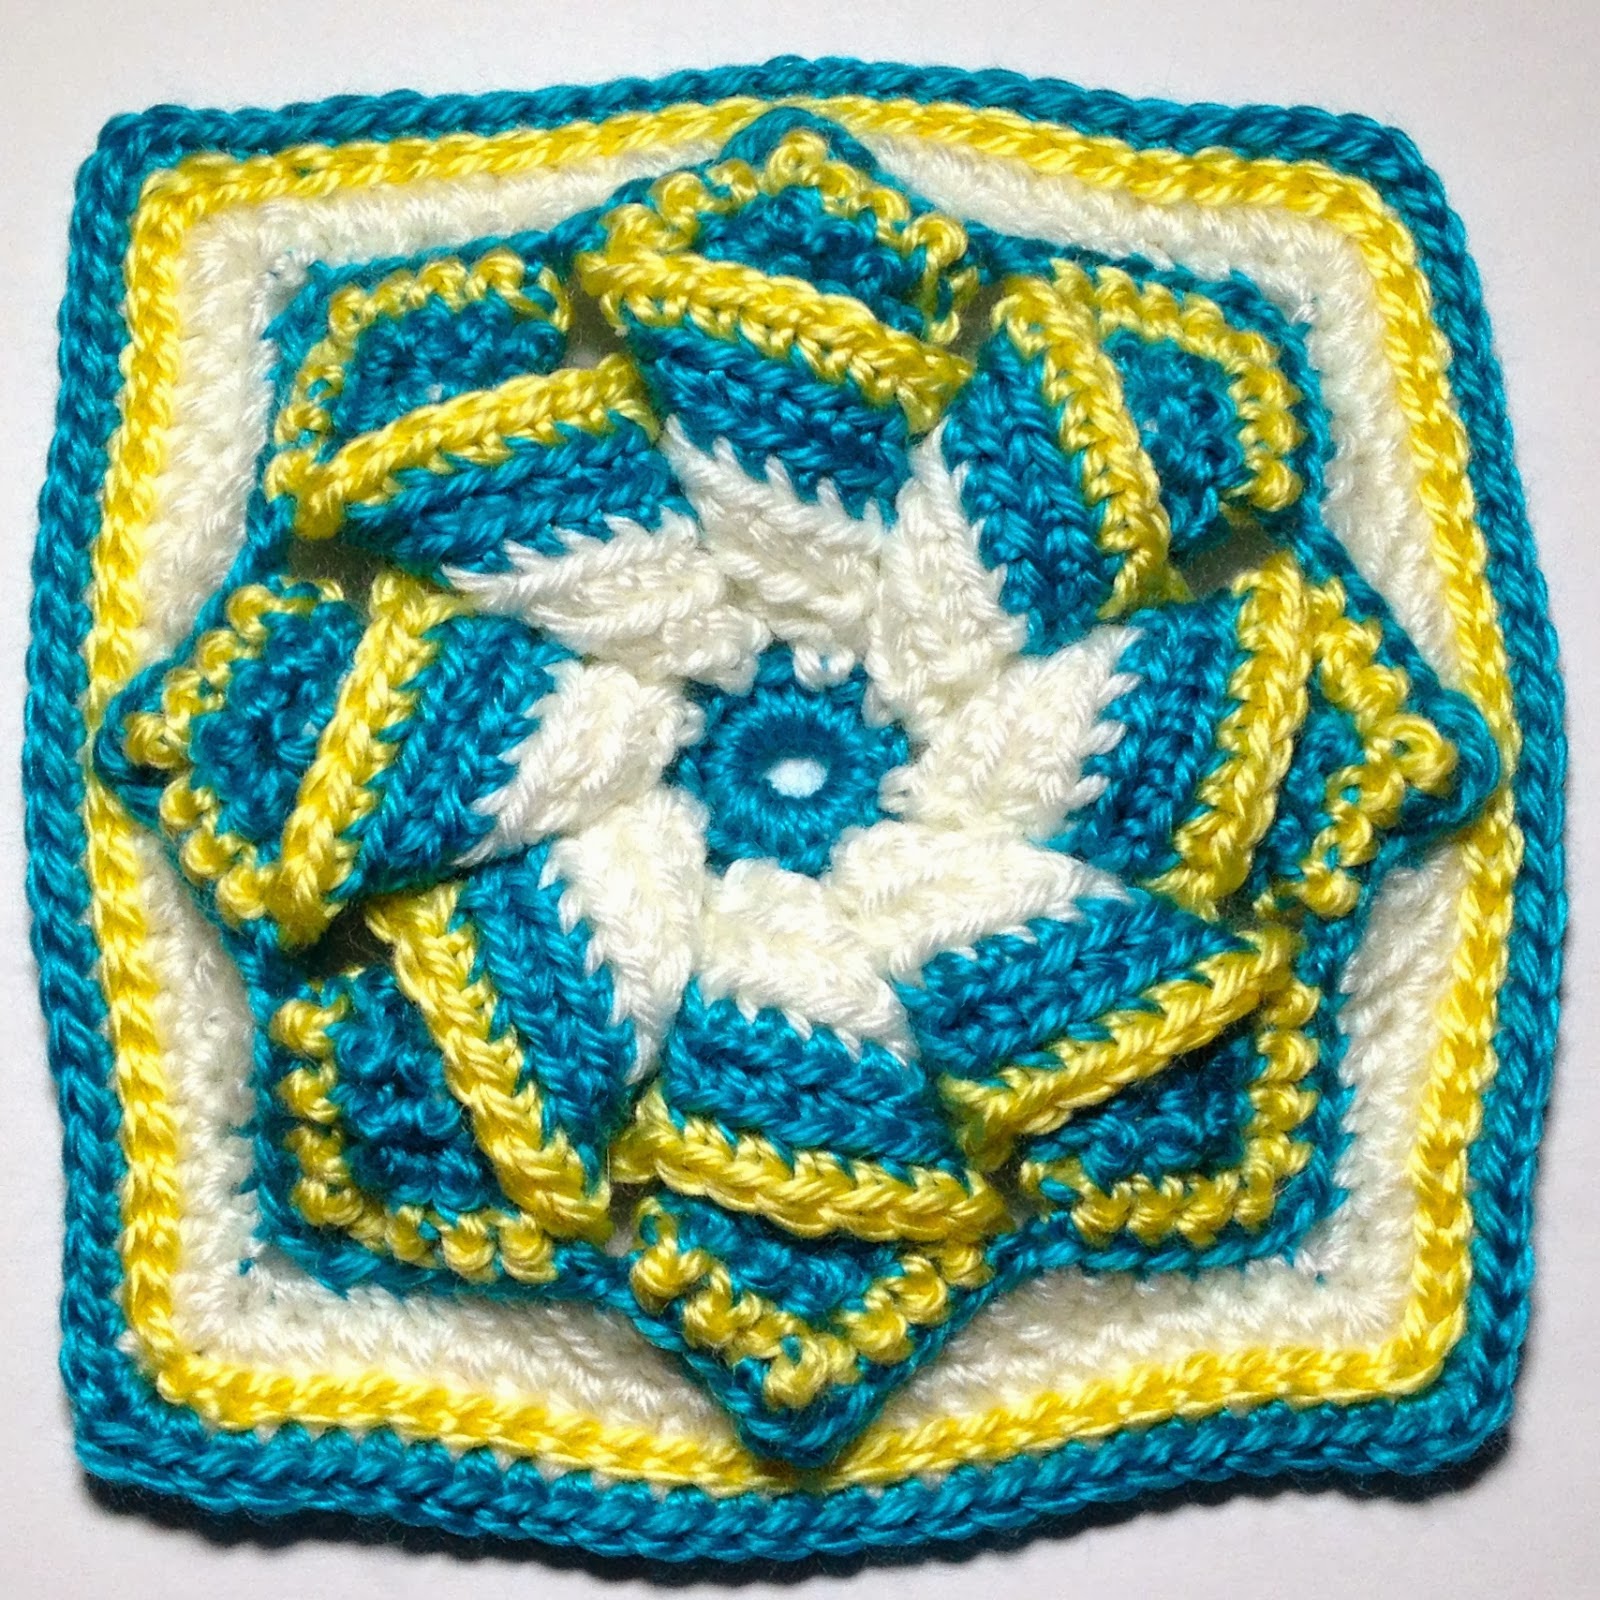 Free Crochet Patterns: Free Crochet Granny Square Motif Patterns